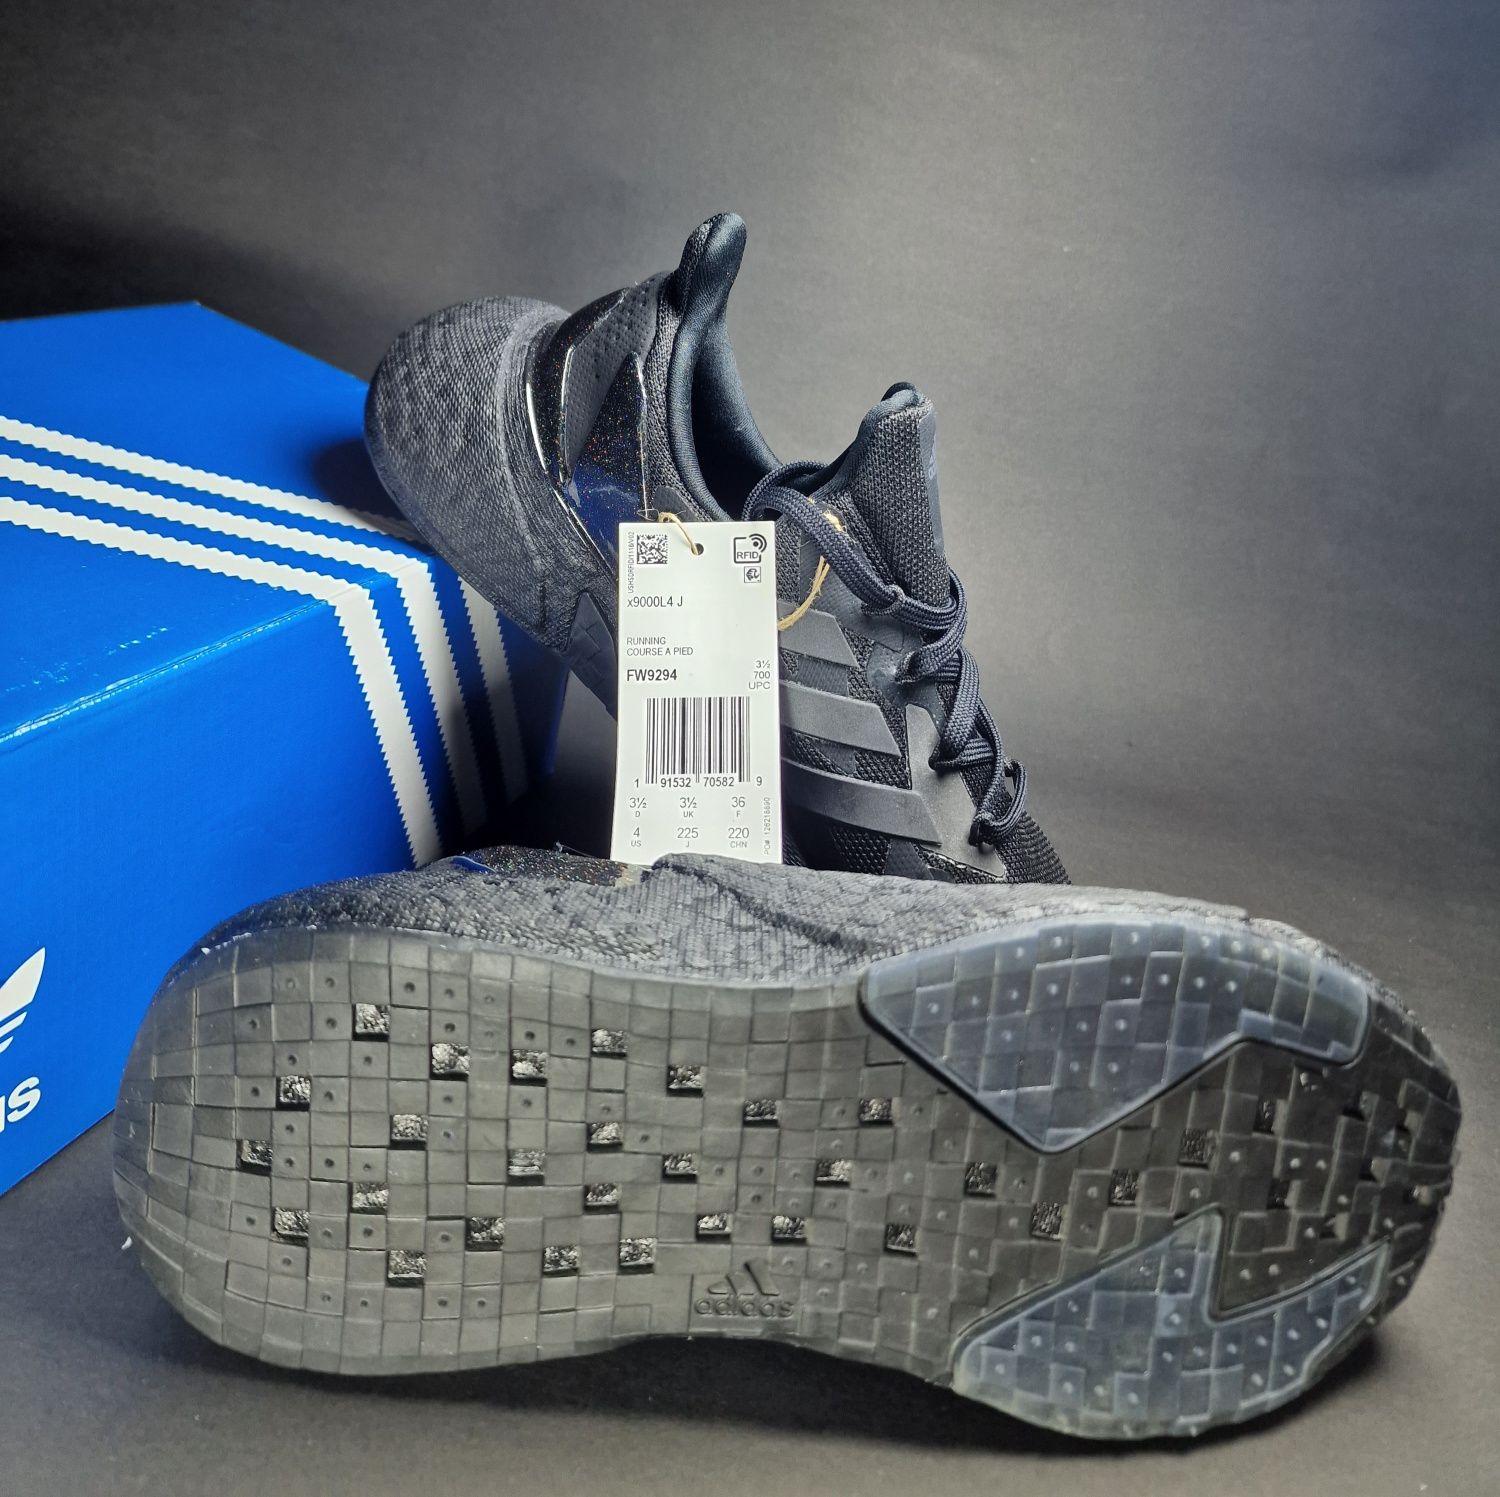 Кроссовка Adidas X9000L4 100% оригинал